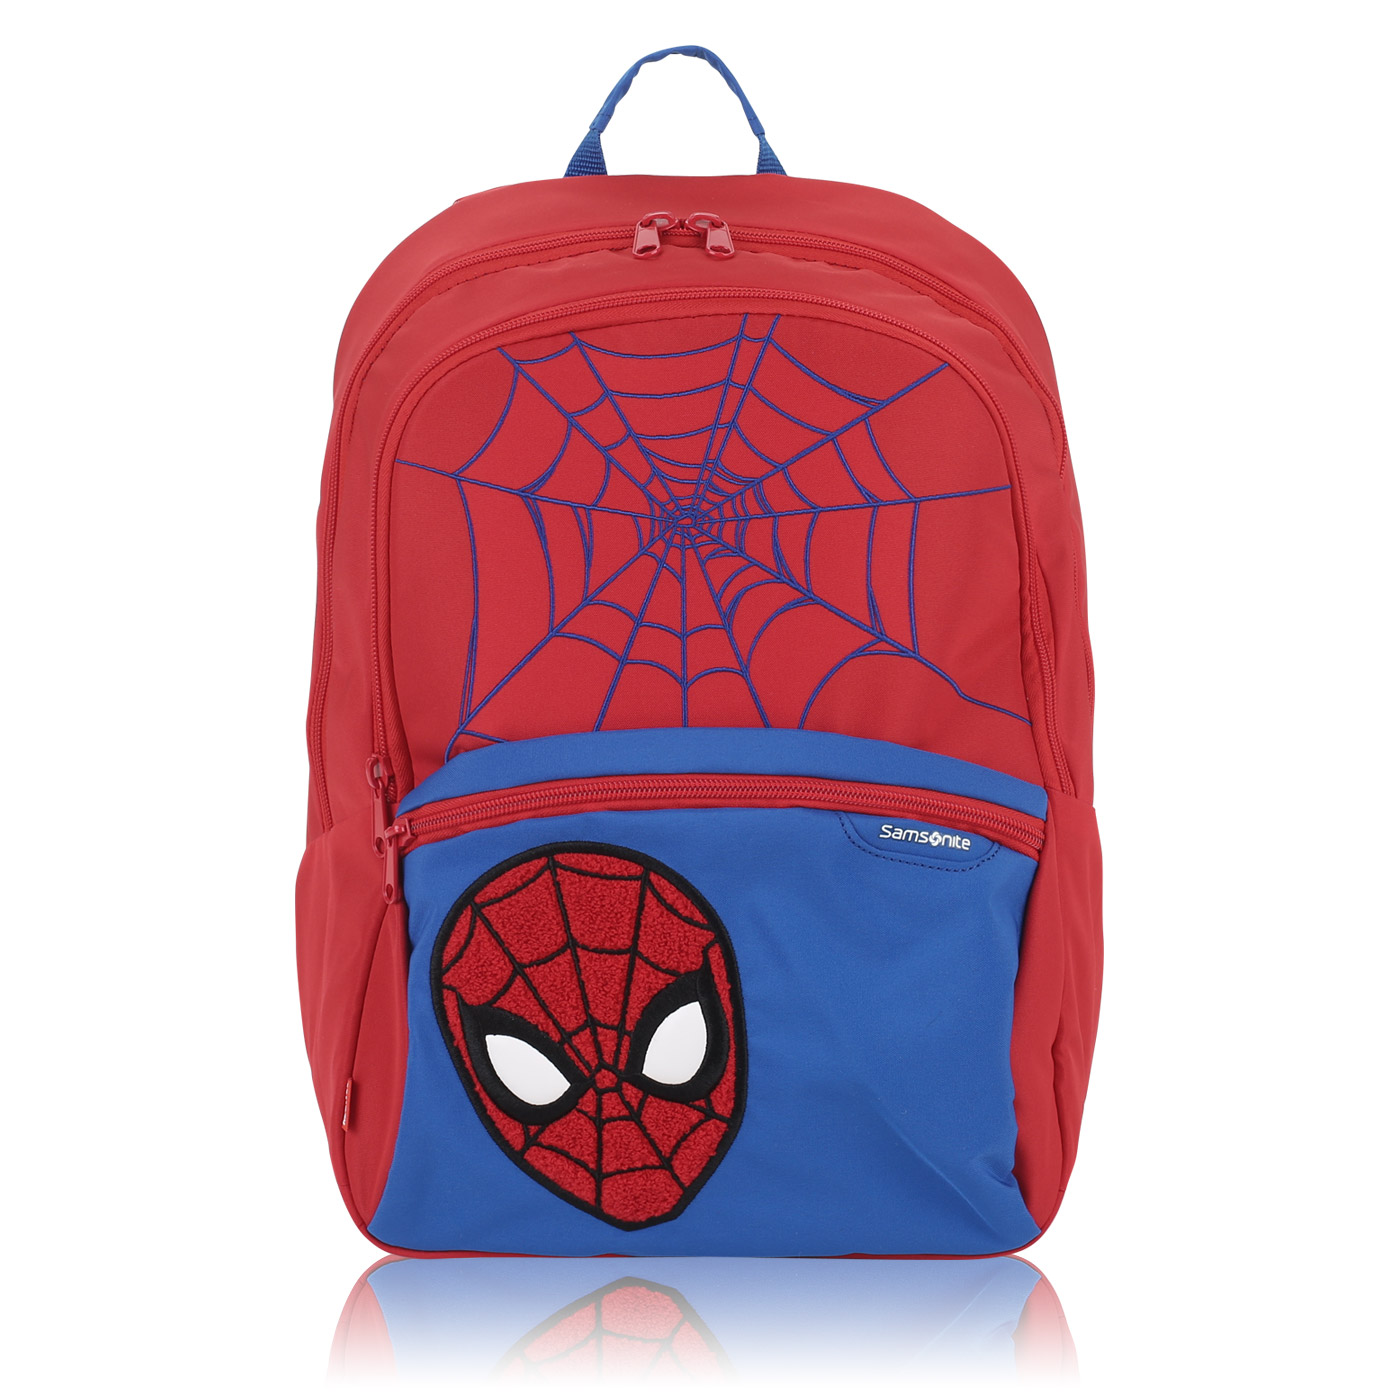 Samsonite Детский рюкзак "Человек-паук"